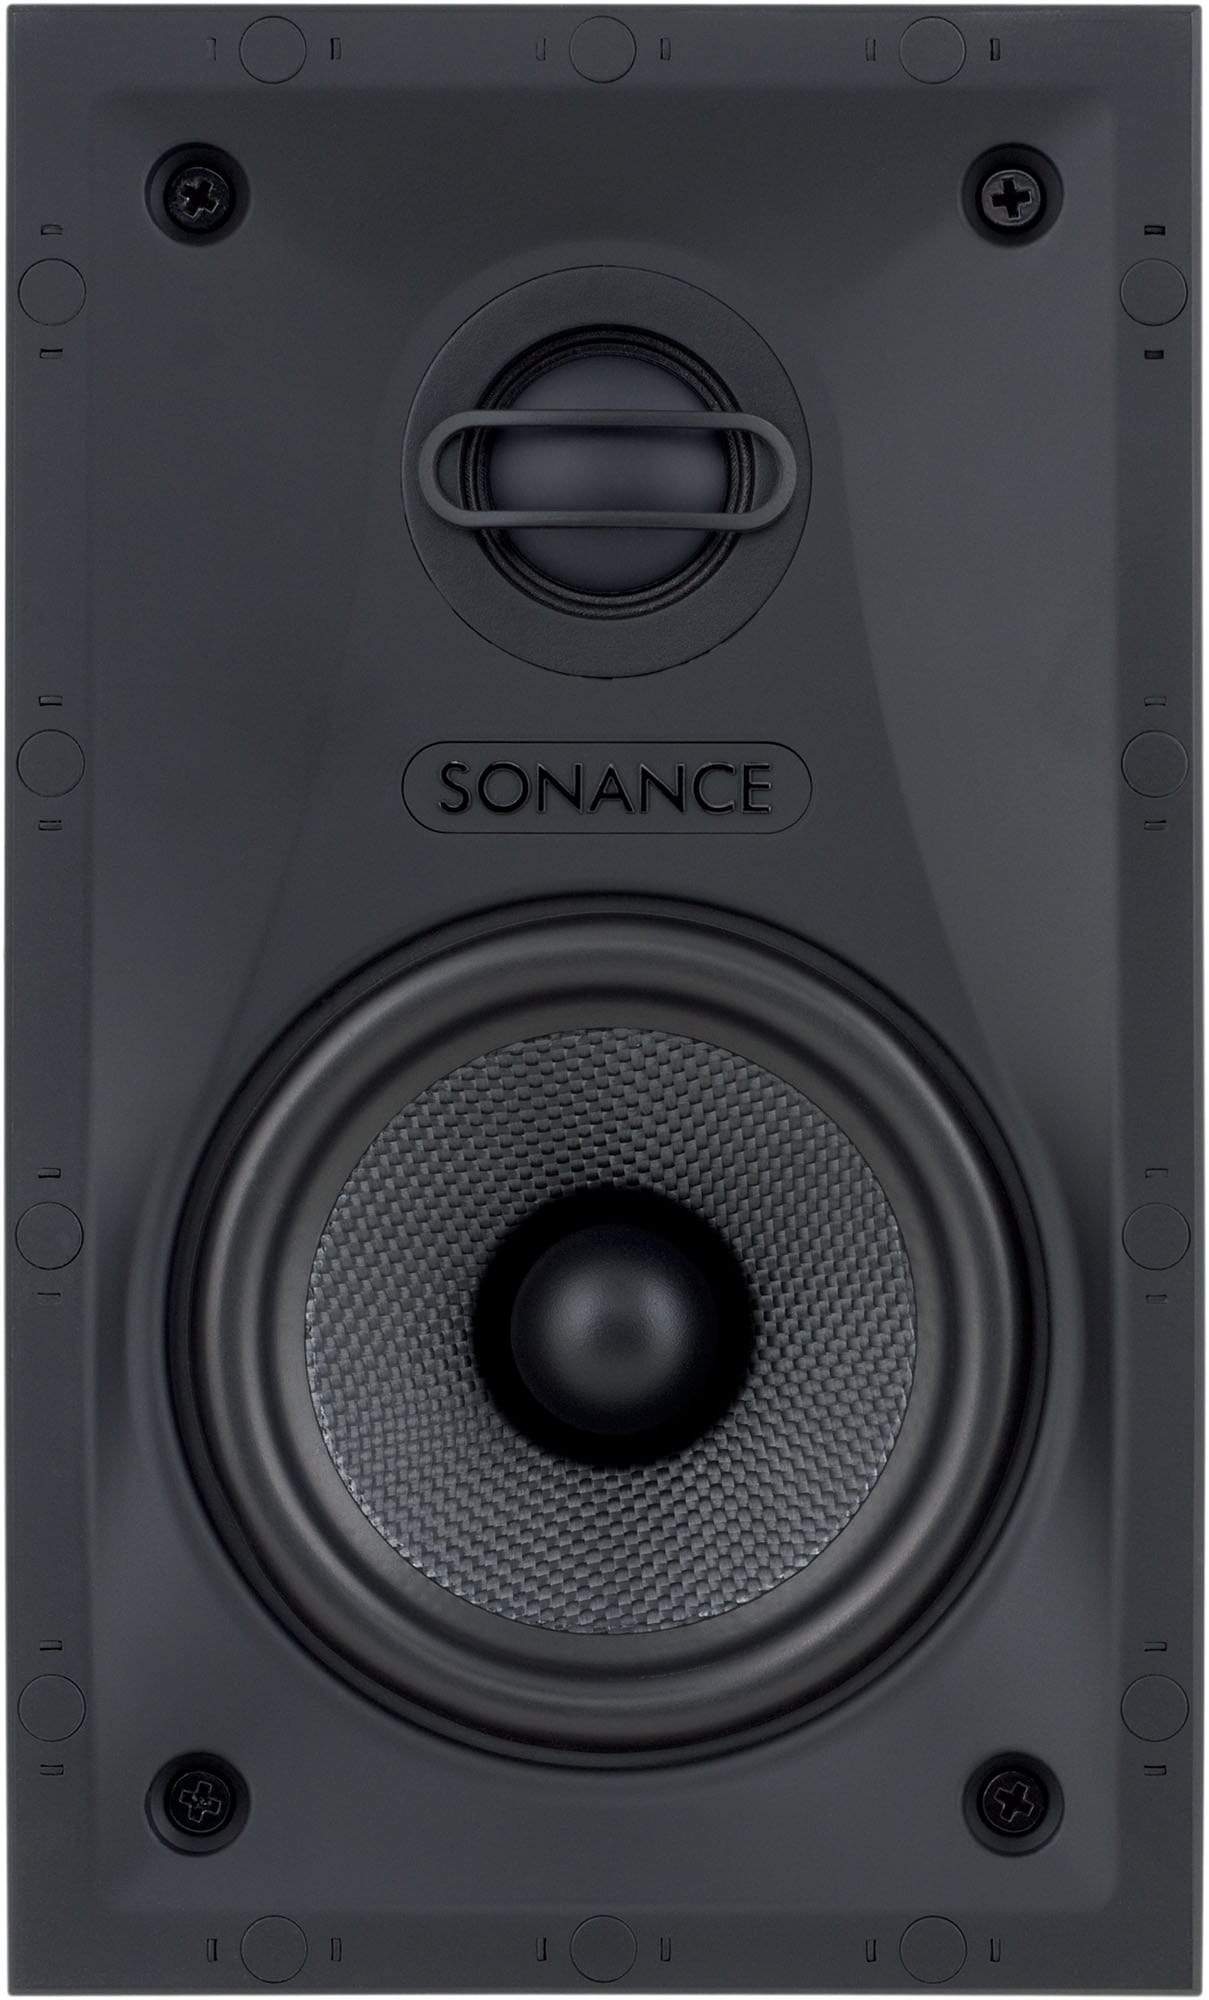 Sonance VP46 In-wall Speakers